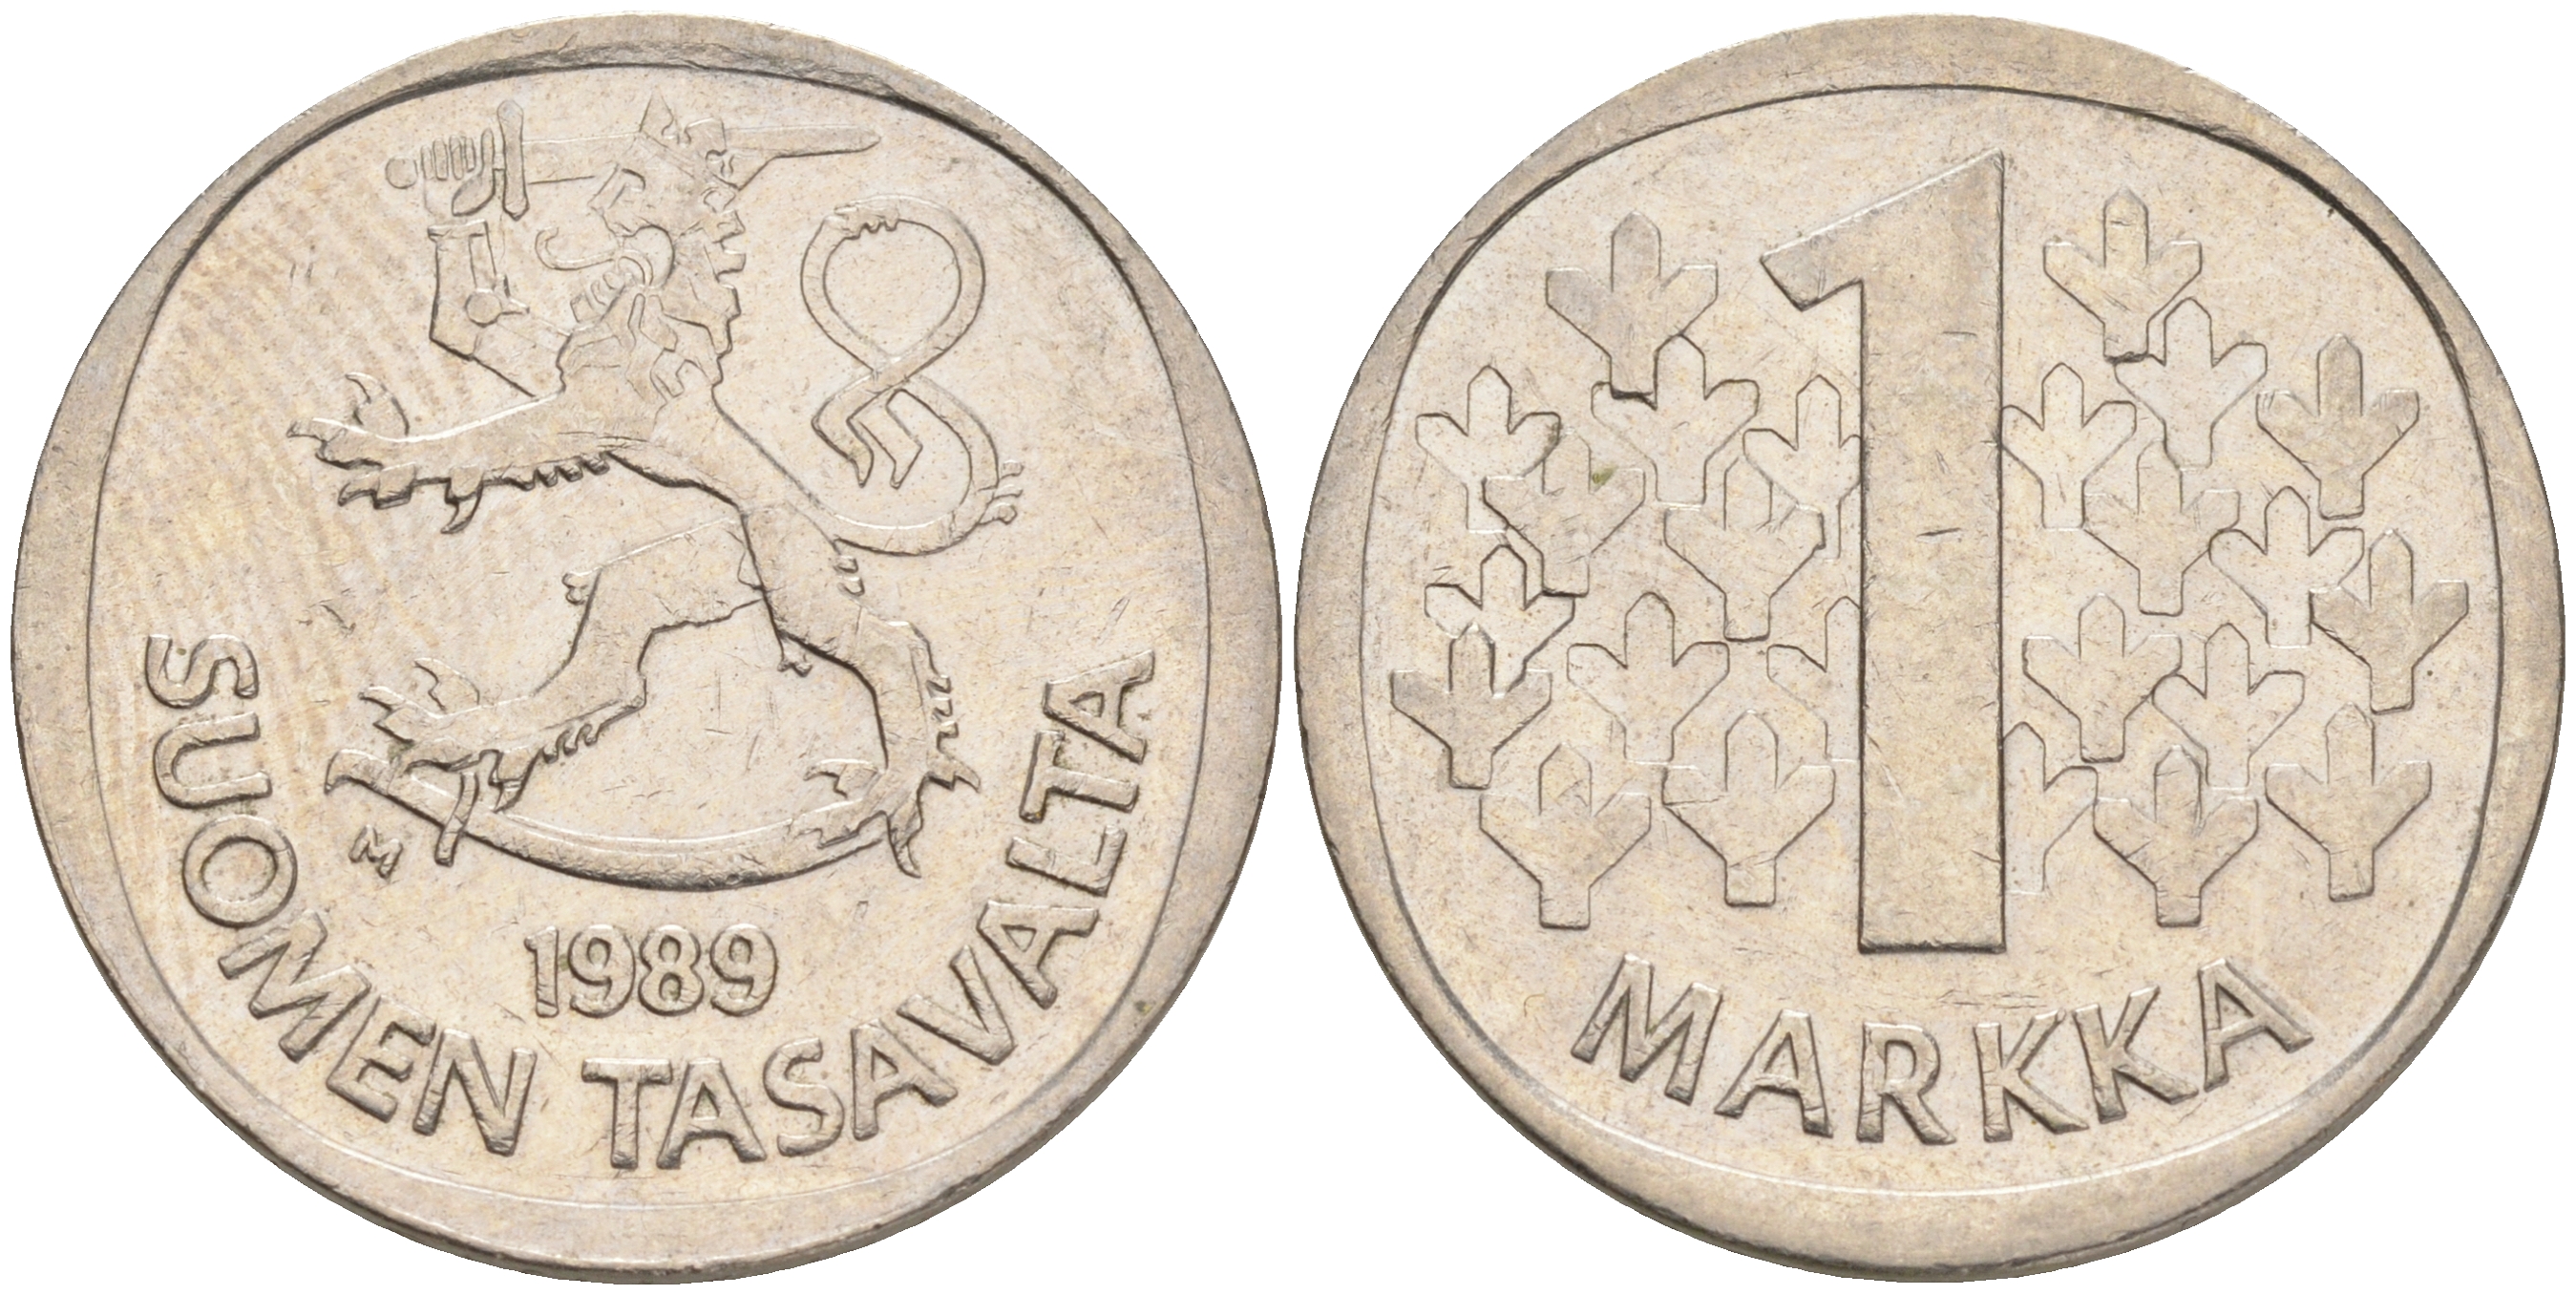 1 mark each. Финляндия 1 марка 1974. Монета markka 1976. Монета 1 финская марка. Карело-финская монета.